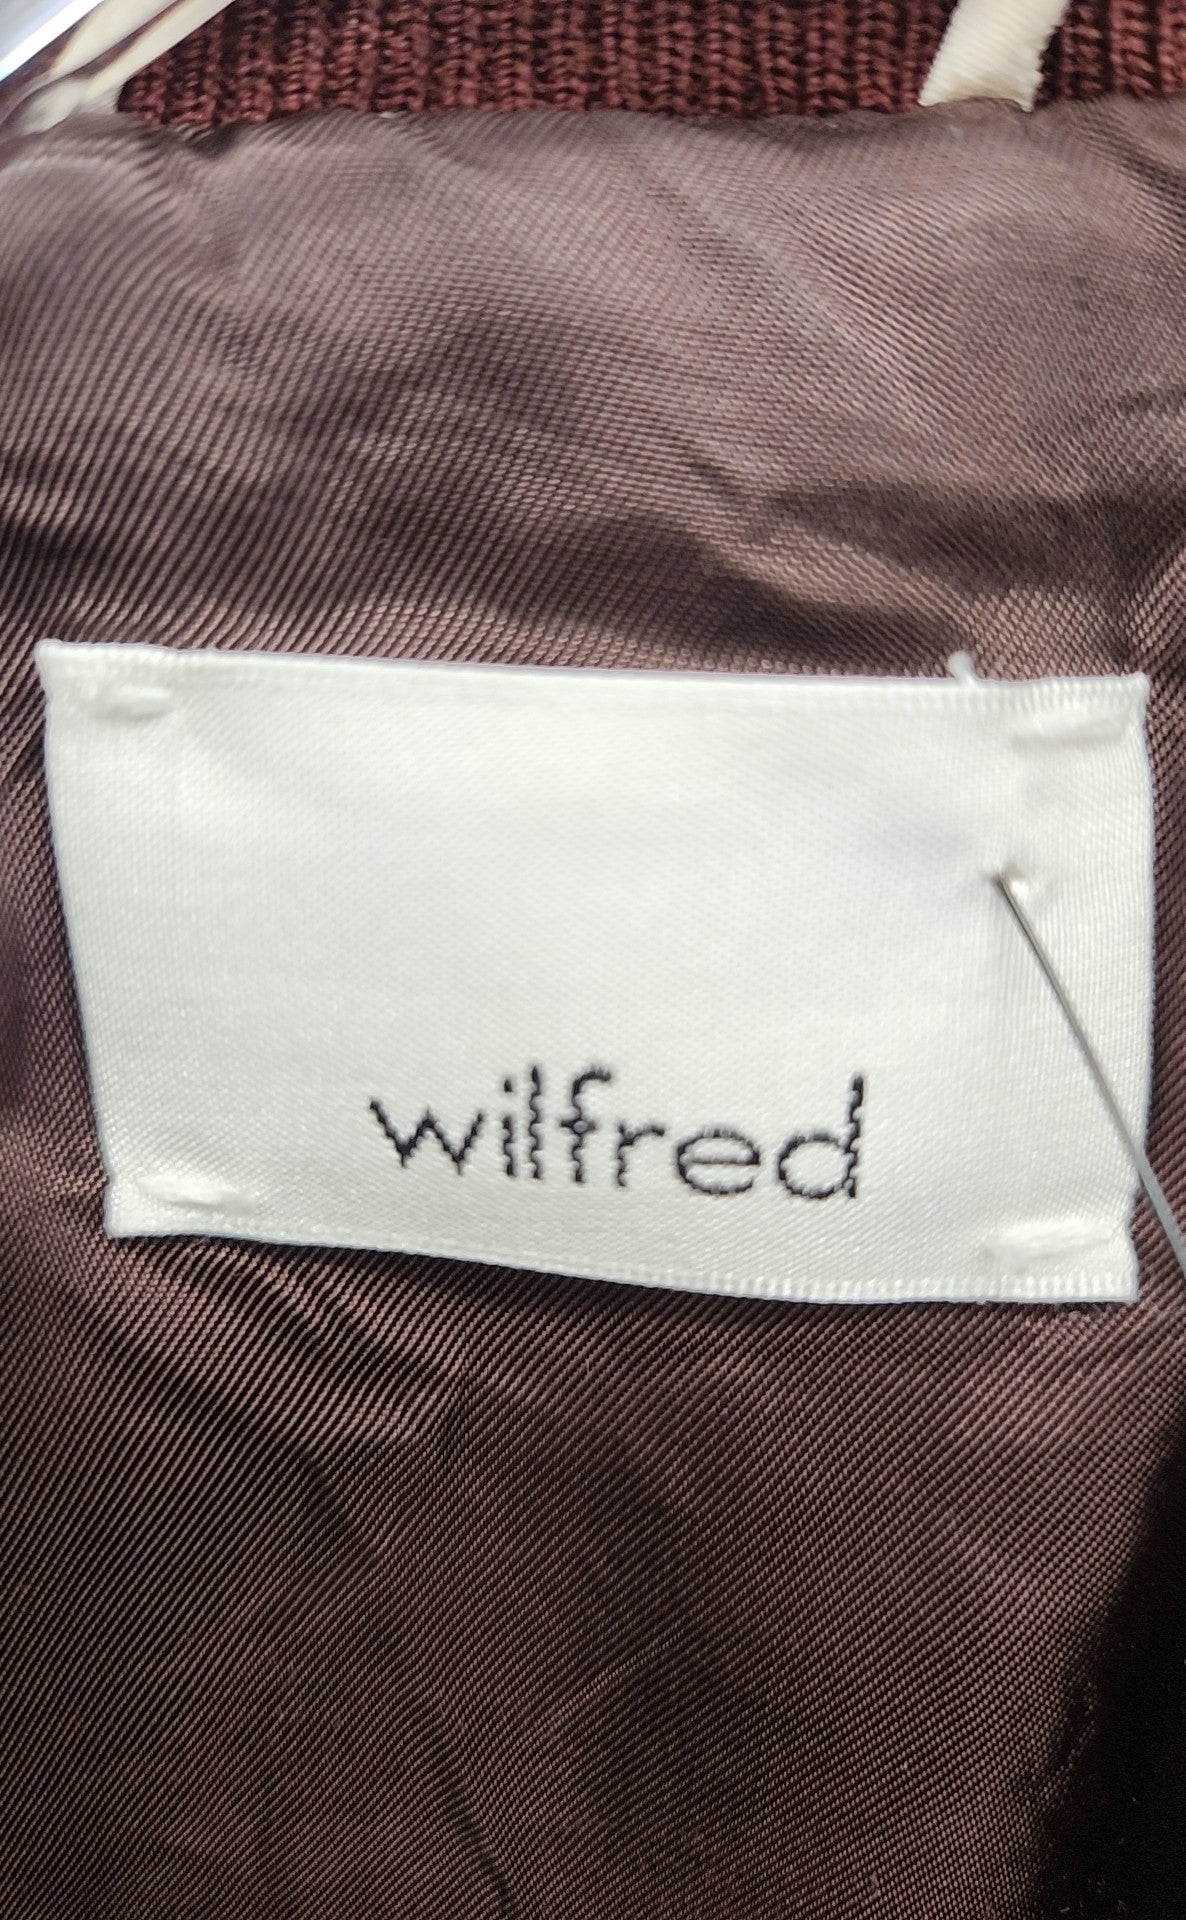 Wilfred Women's Size M Brown Jacket